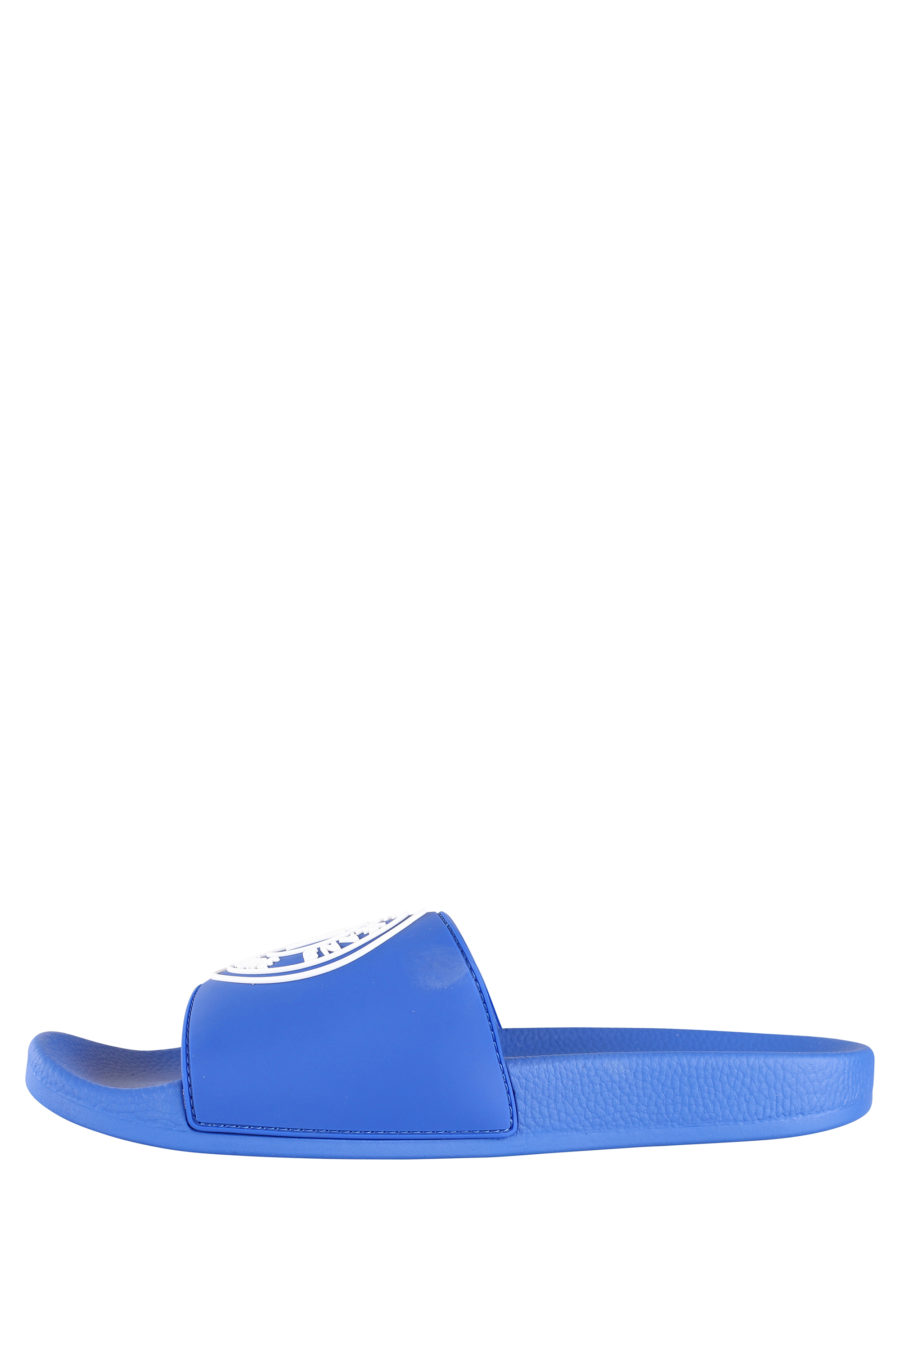 Blaue Flip Flops mit Kreislogo - IMG 9668